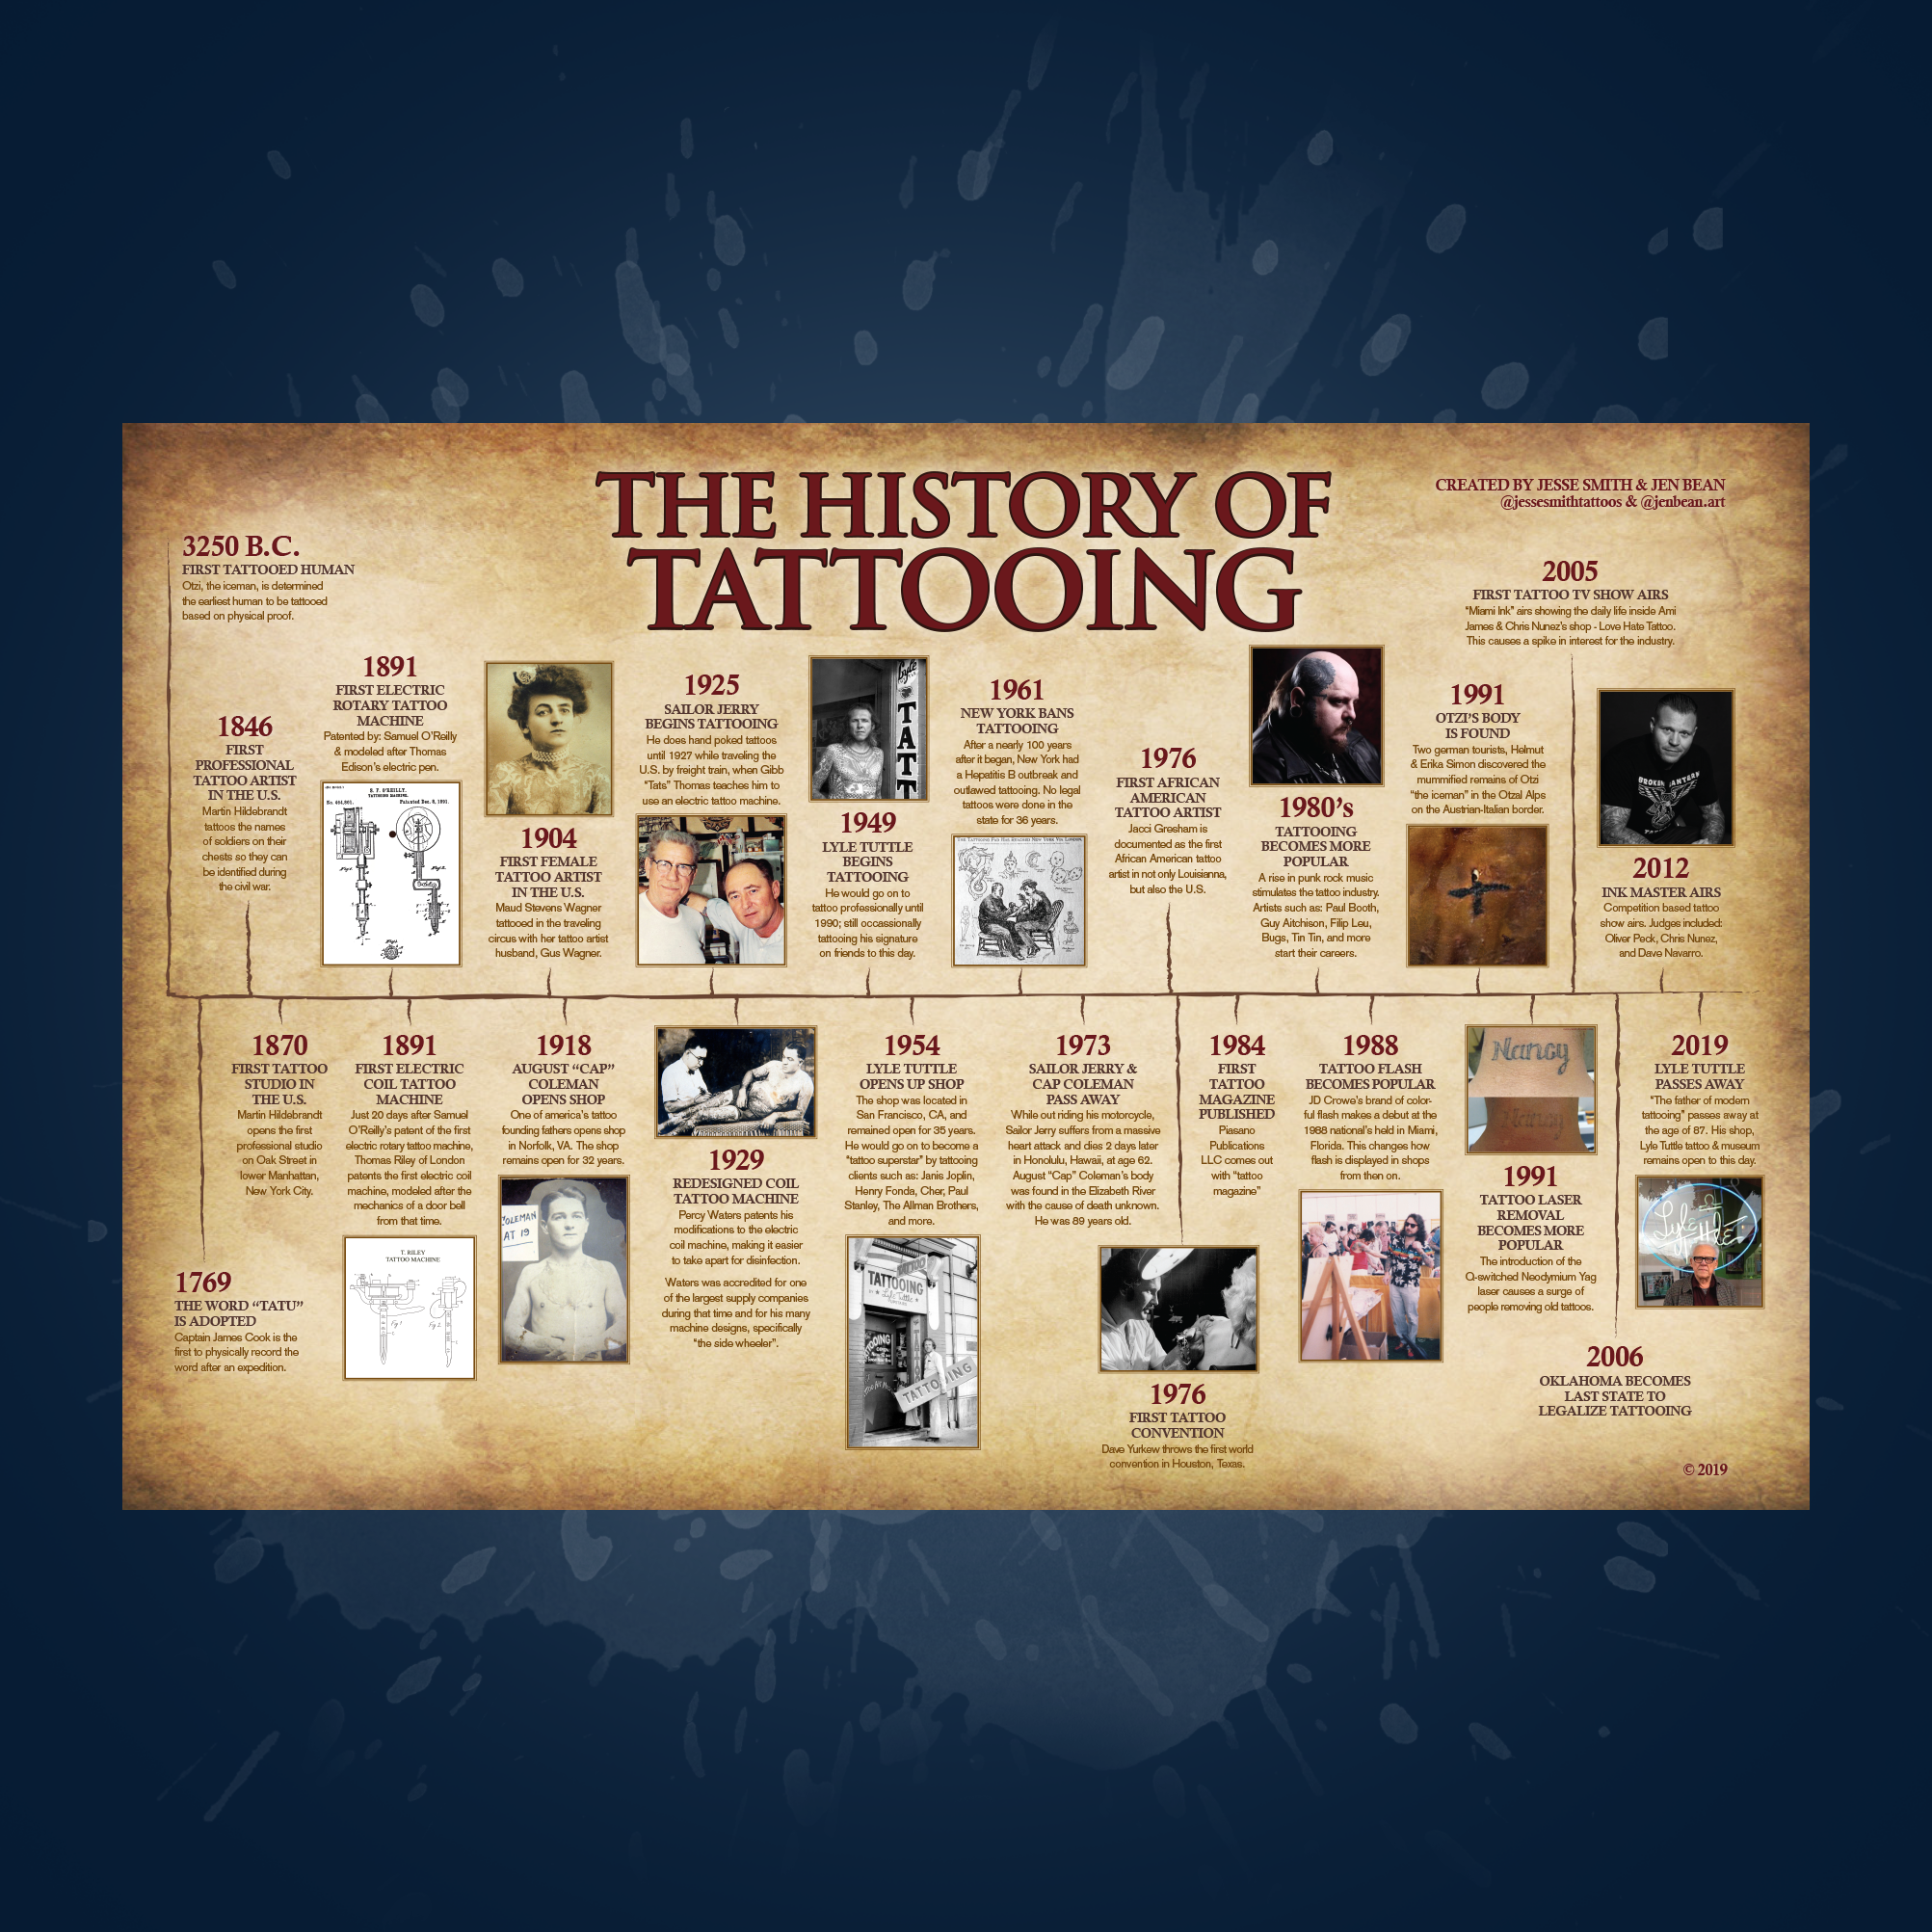 The history and cultural impact of tattoos. | by Shahab sabir | Medium